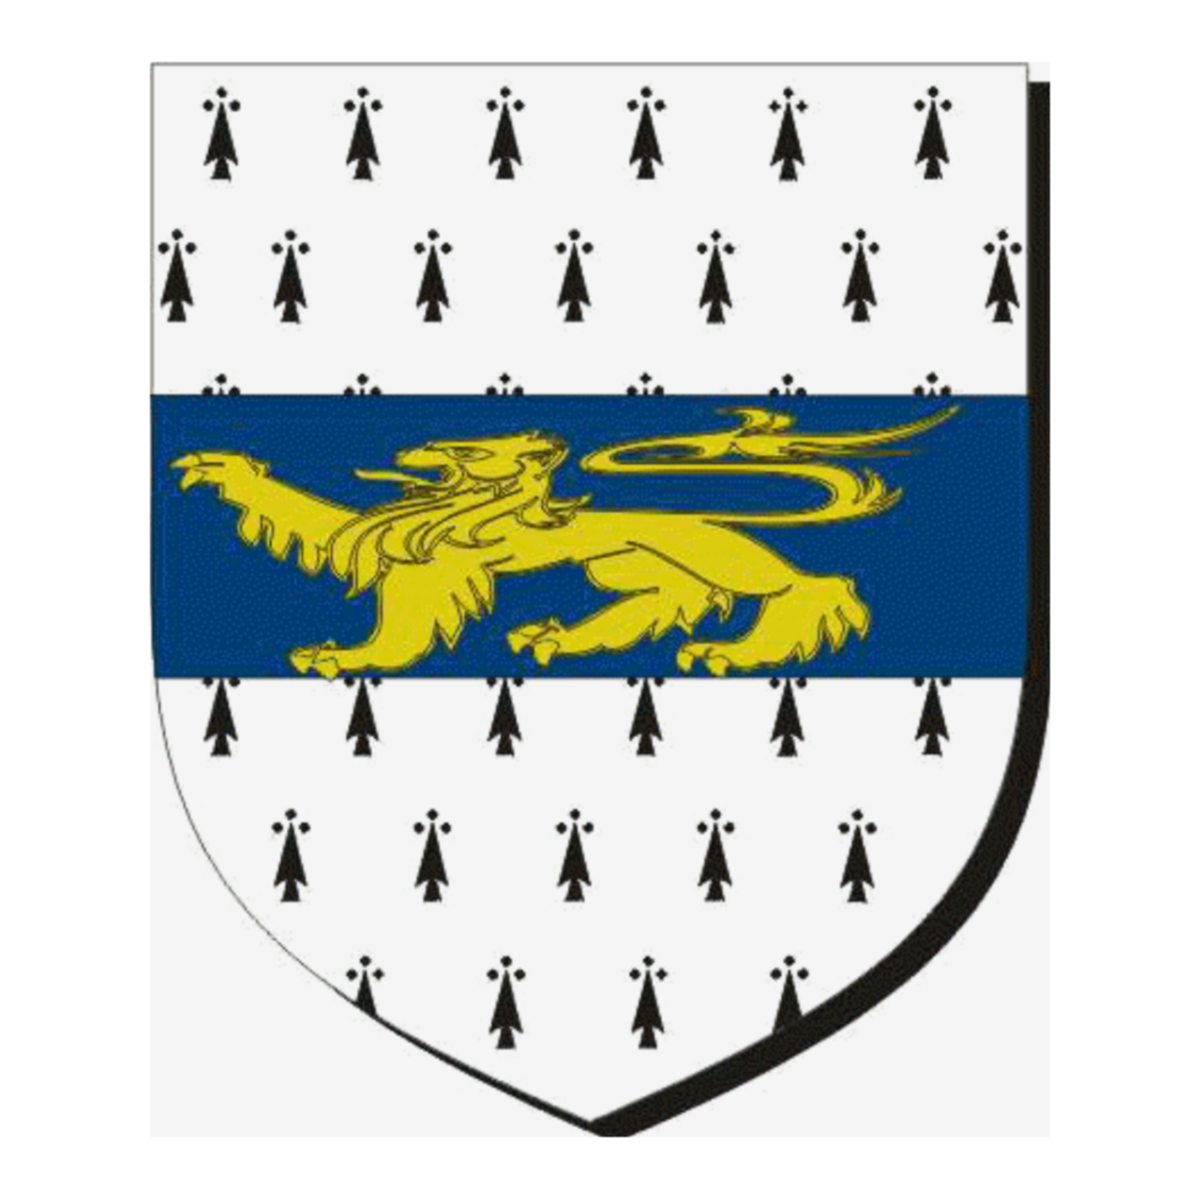 Wappen der FamilieGarrett